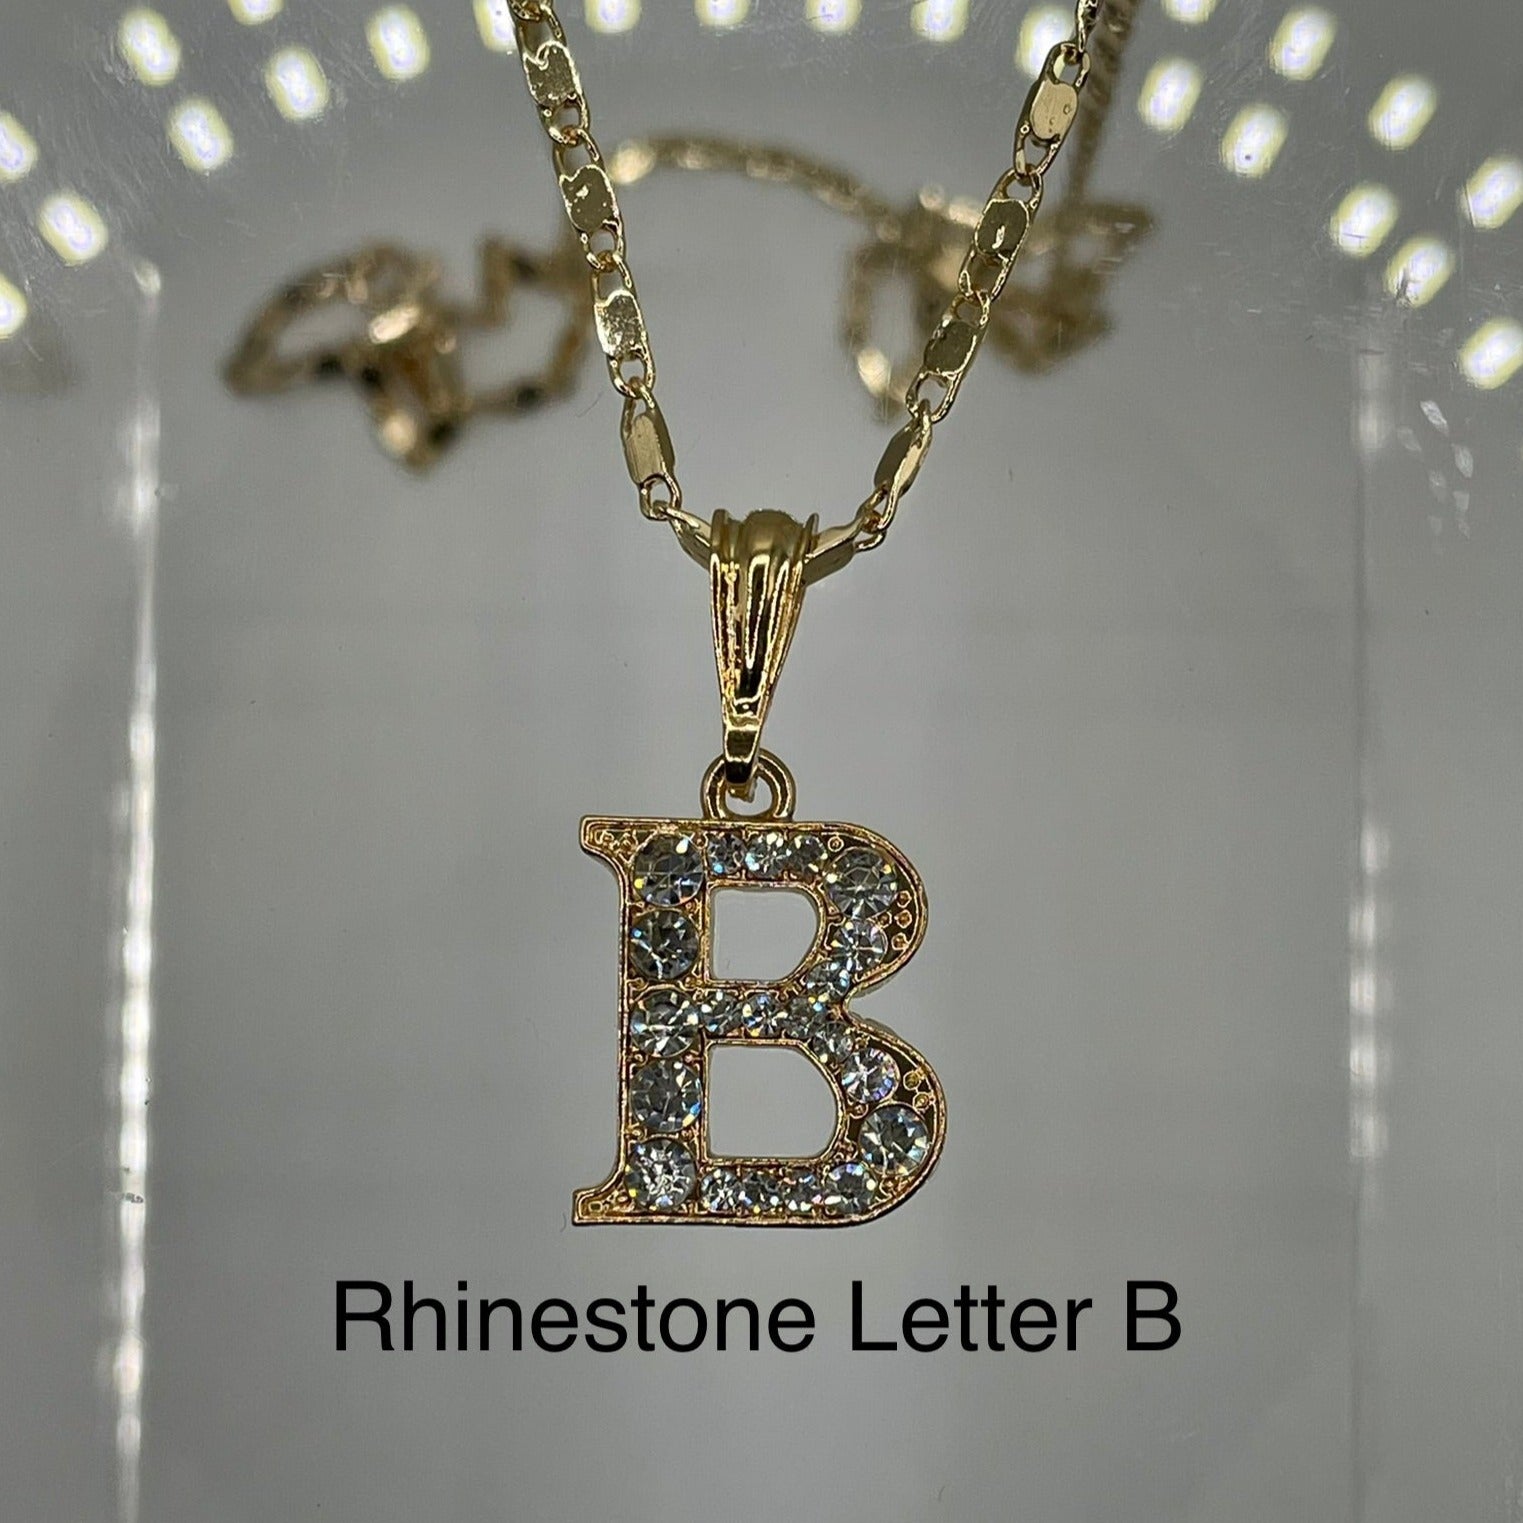 Rhinestone letter B pendant 14k gold plated on gold plated cute necklace. Letter pendants.